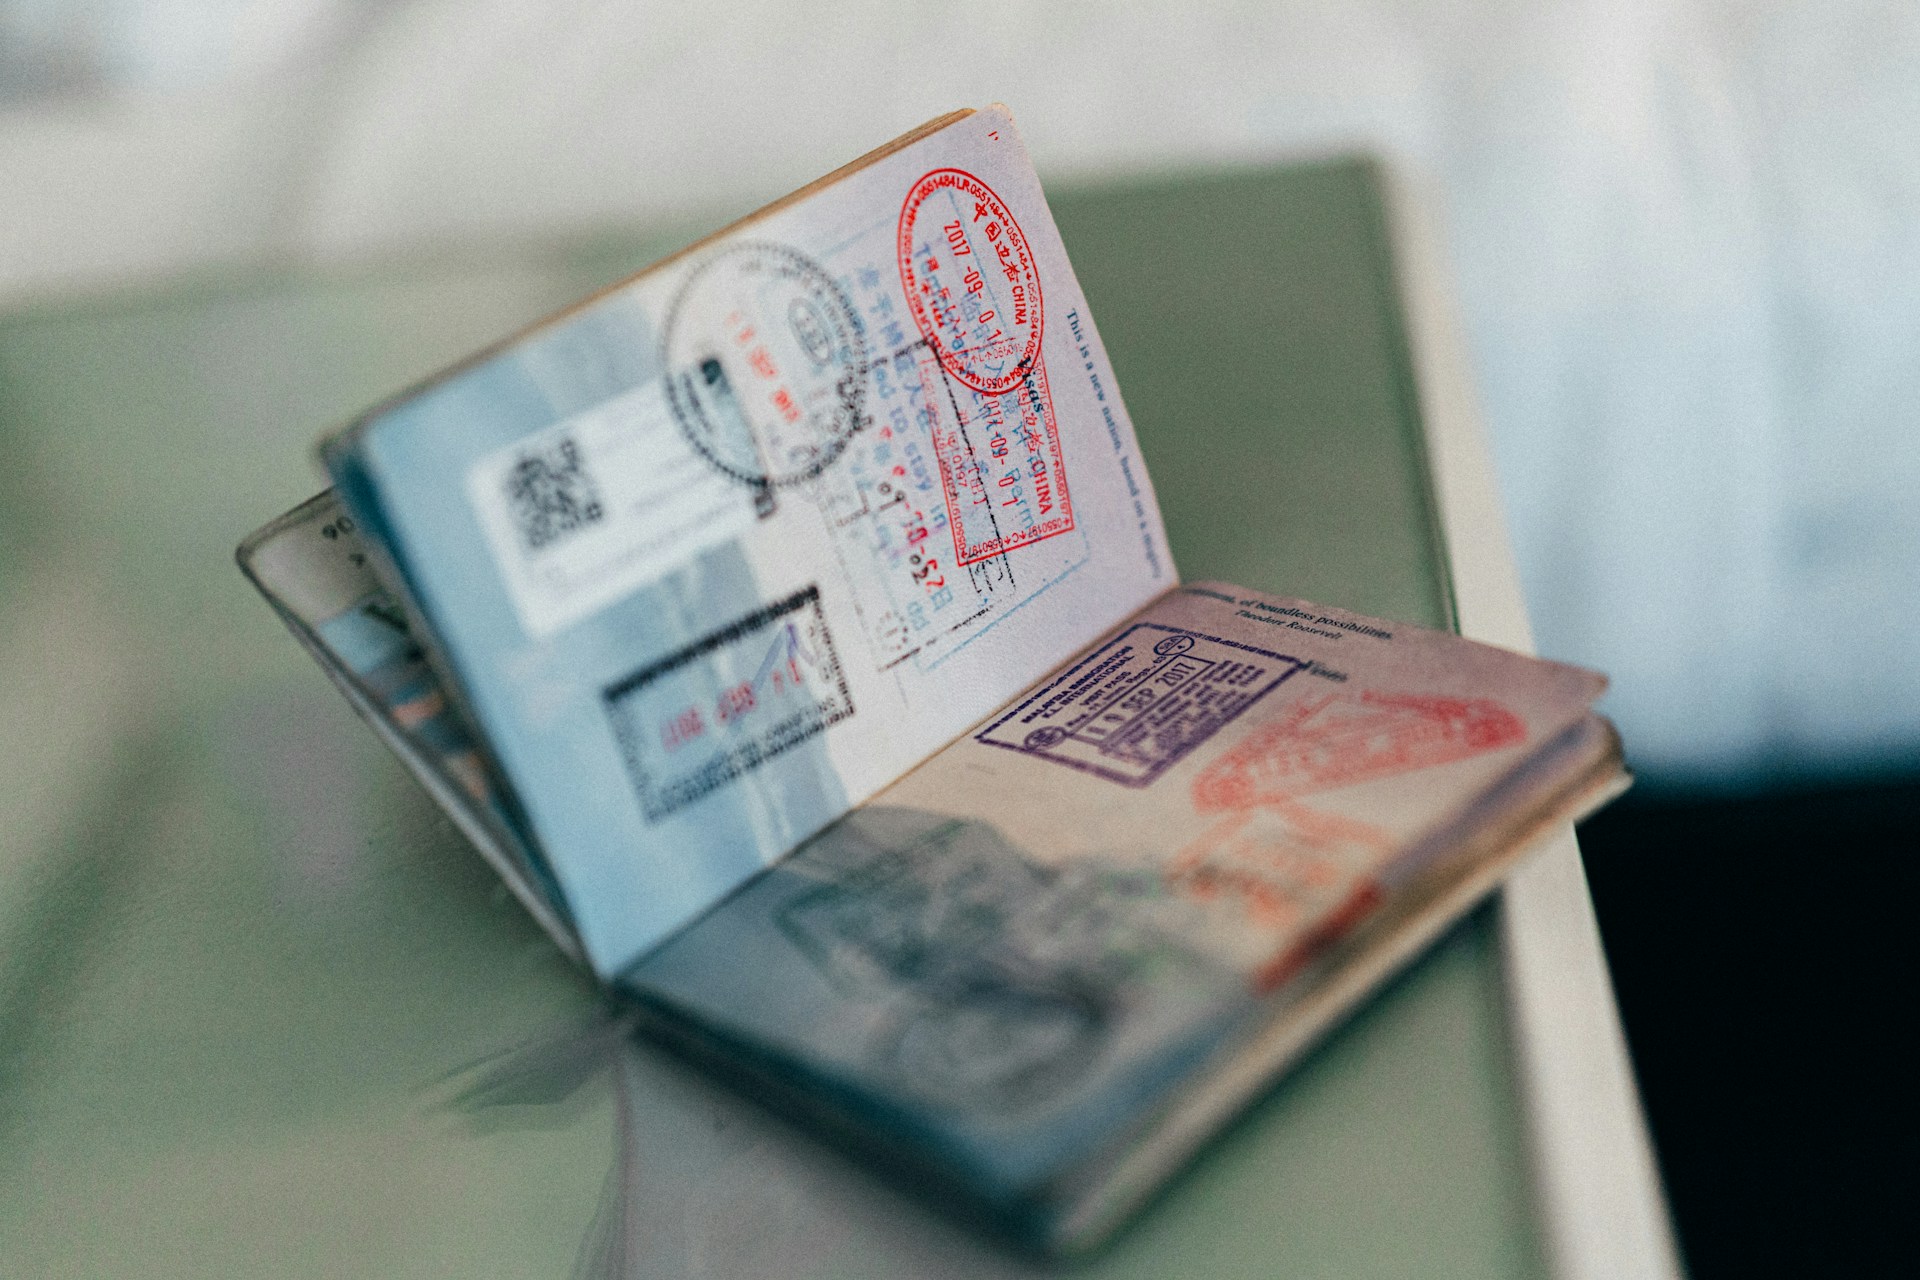 an open passport showing visa stamps